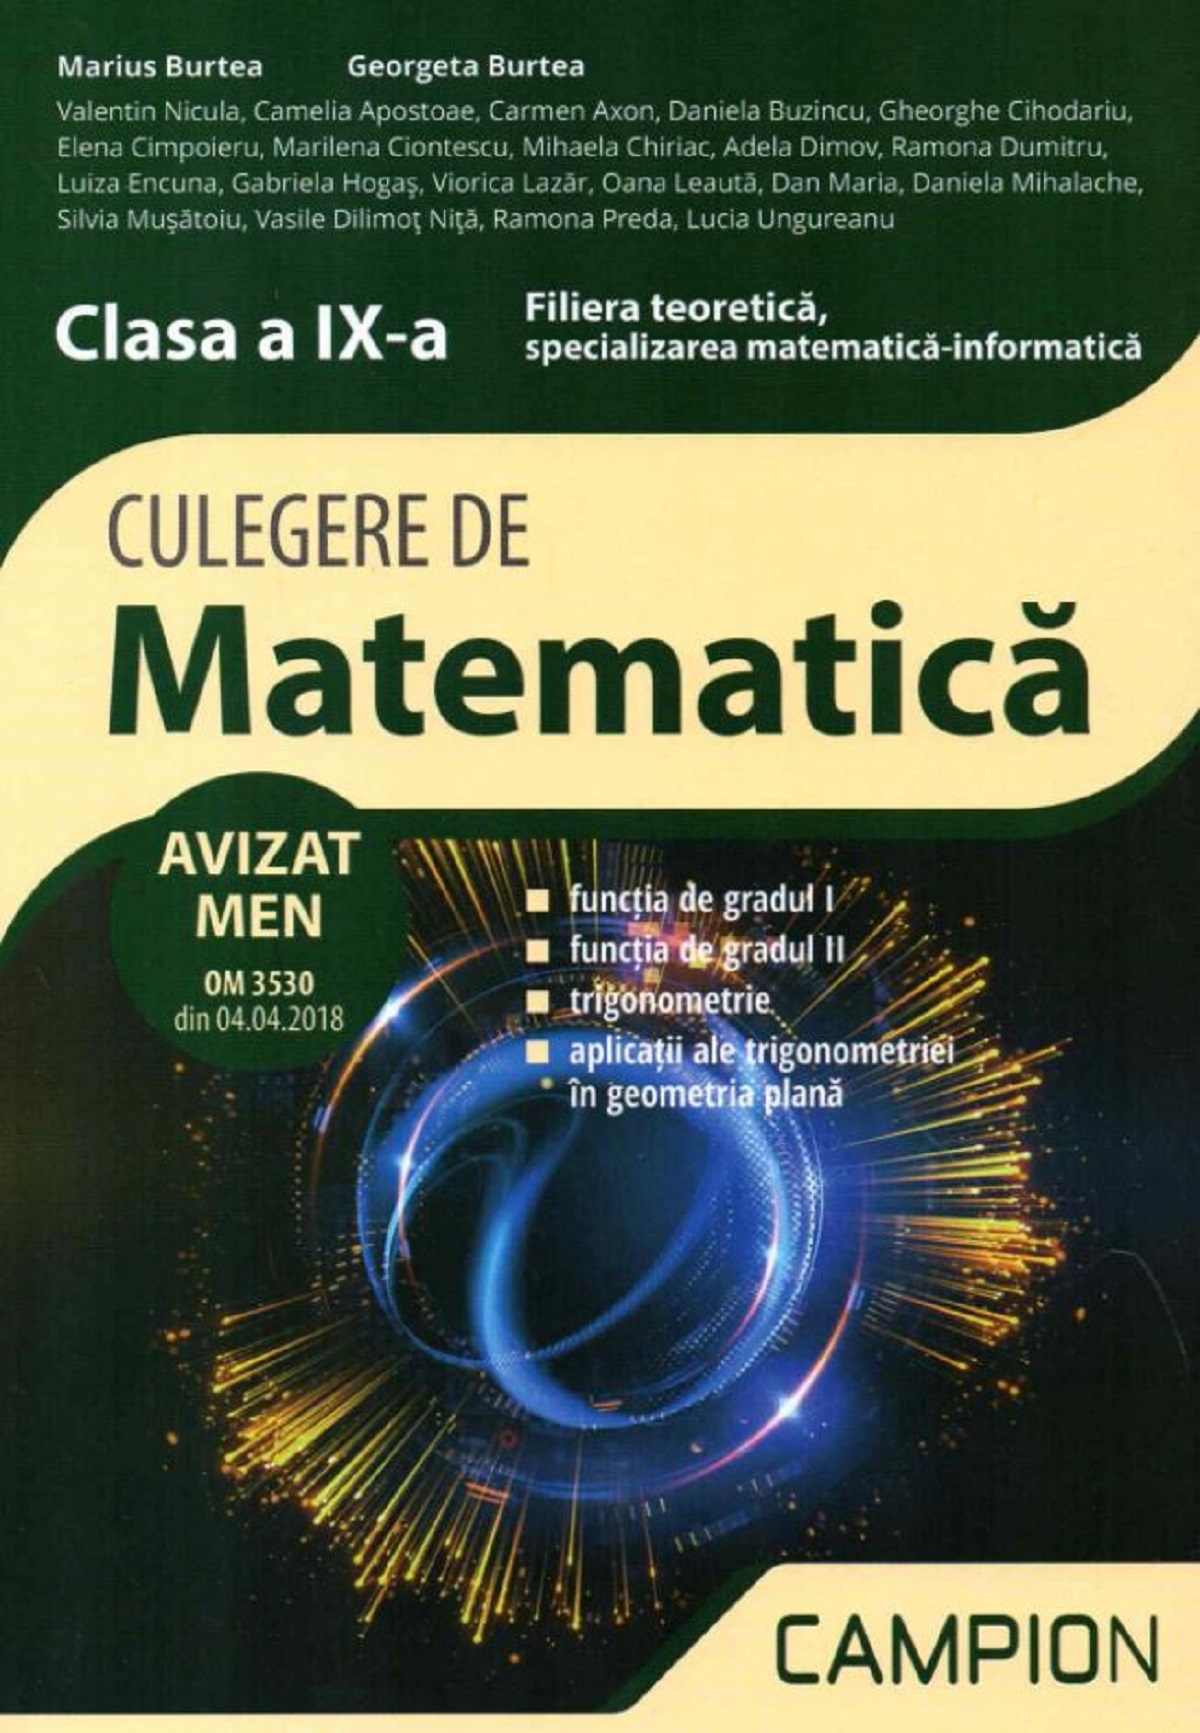 Culegere de matematica. Filiera teoretica: mate-info - Clasa 9 - Marius Burtea, Georgeta Burtea